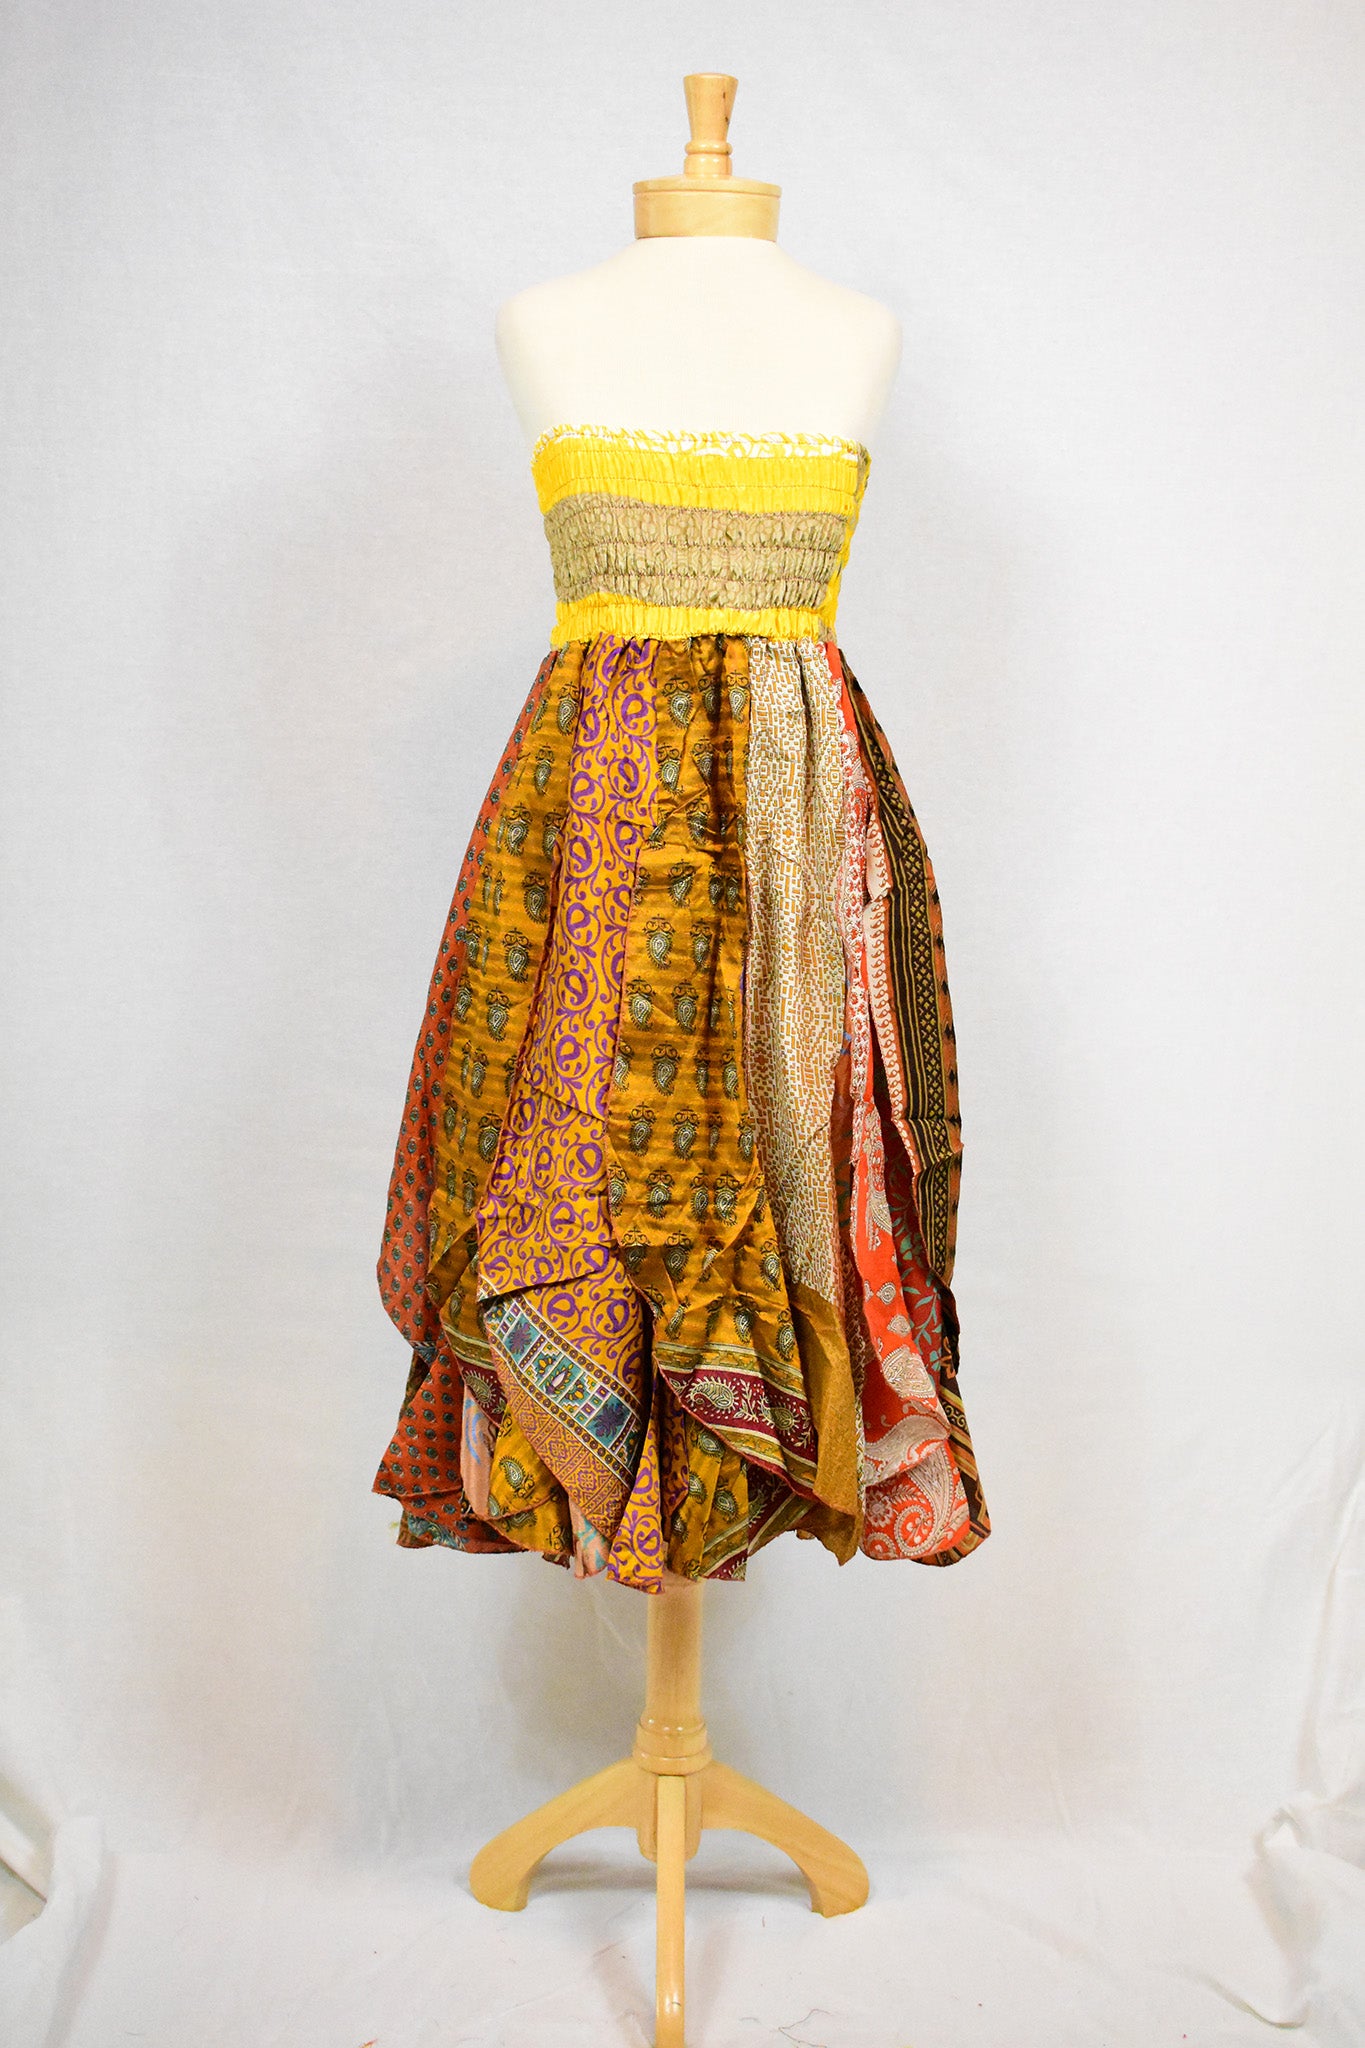 Fairy Dress  Ruffle Skirt 2 Front View